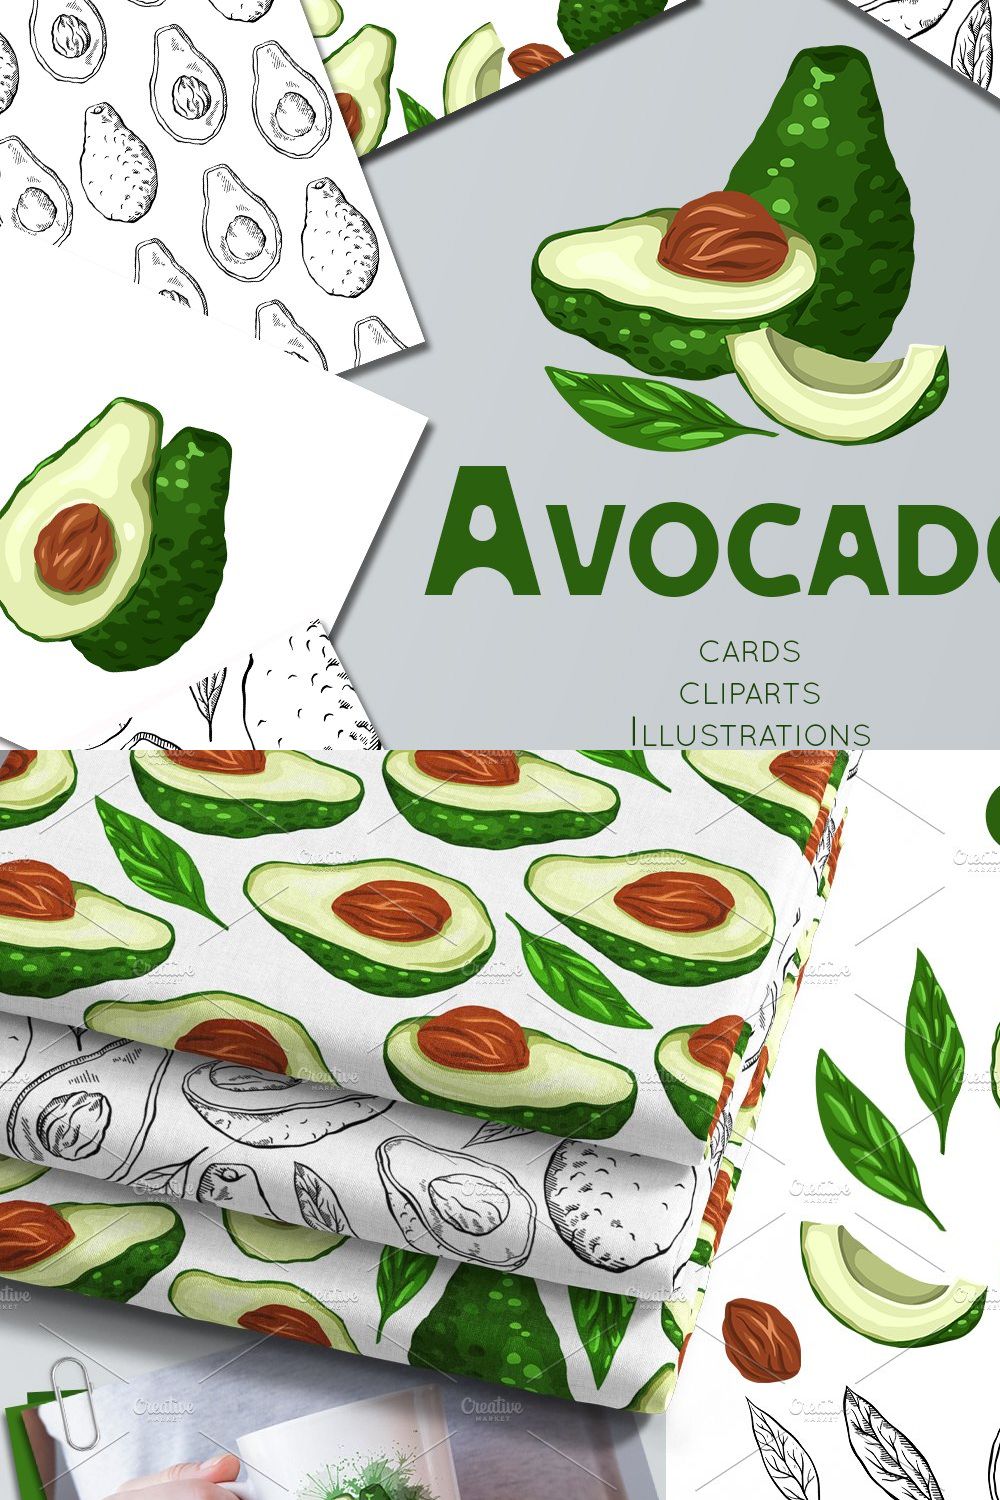 Avocado pinterest preview image.